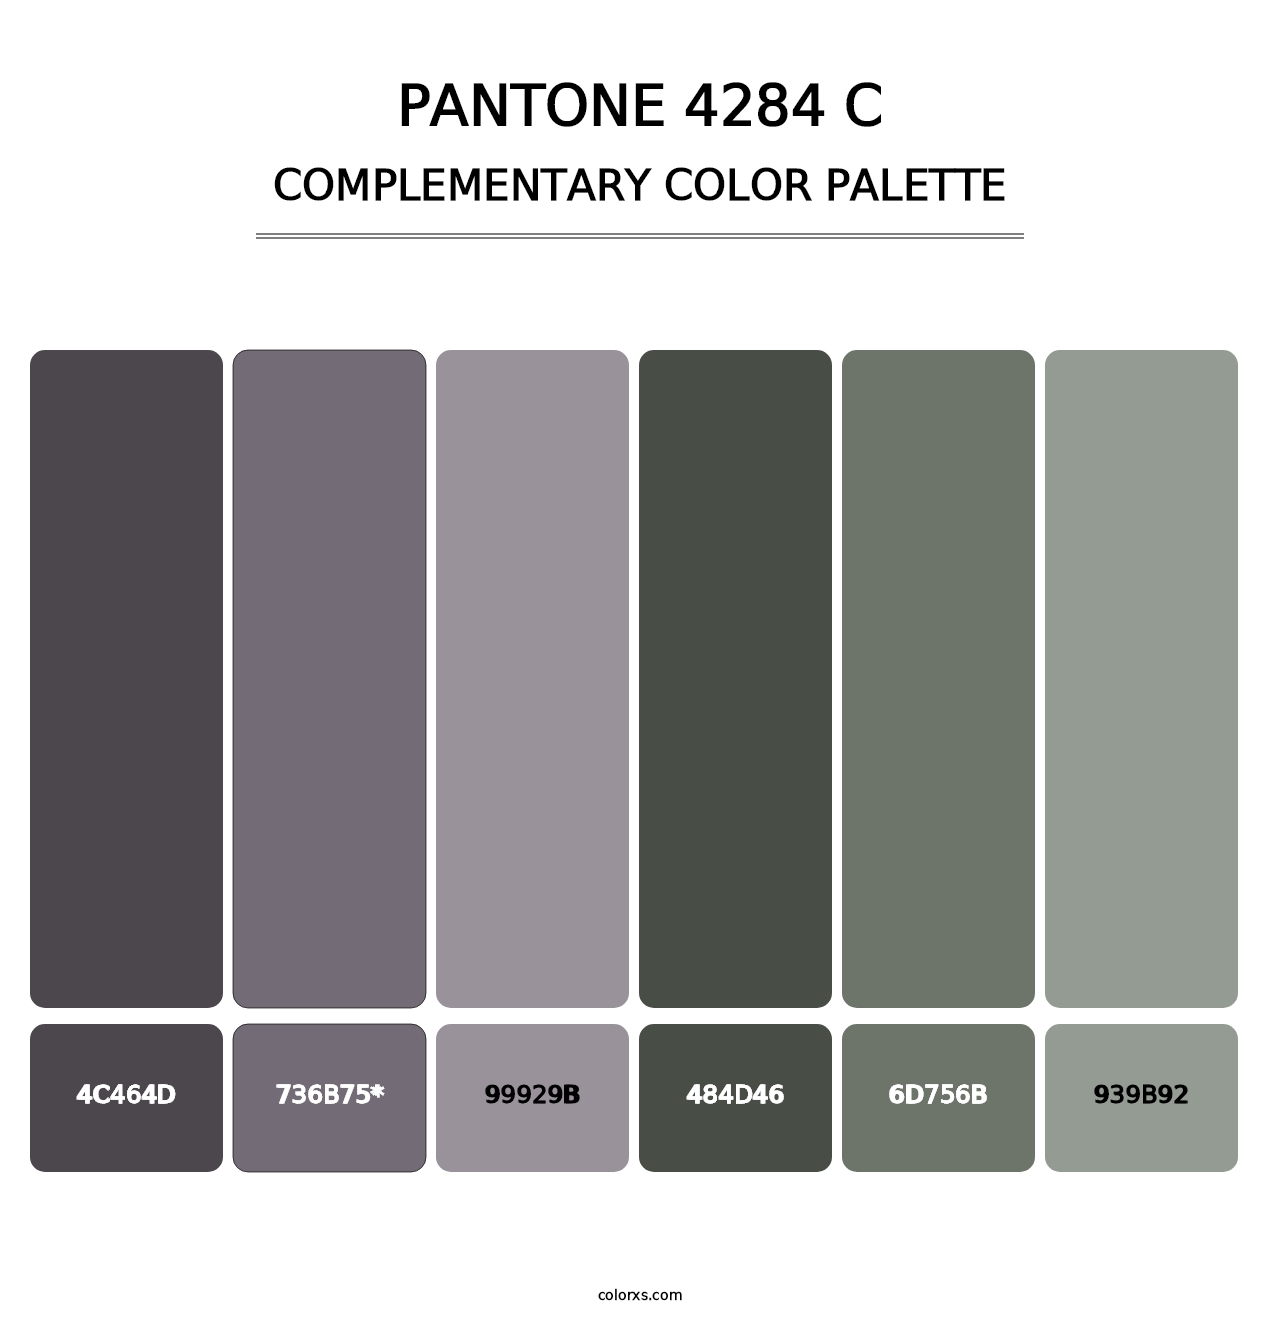 PANTONE 4284 C - Complementary Color Palette